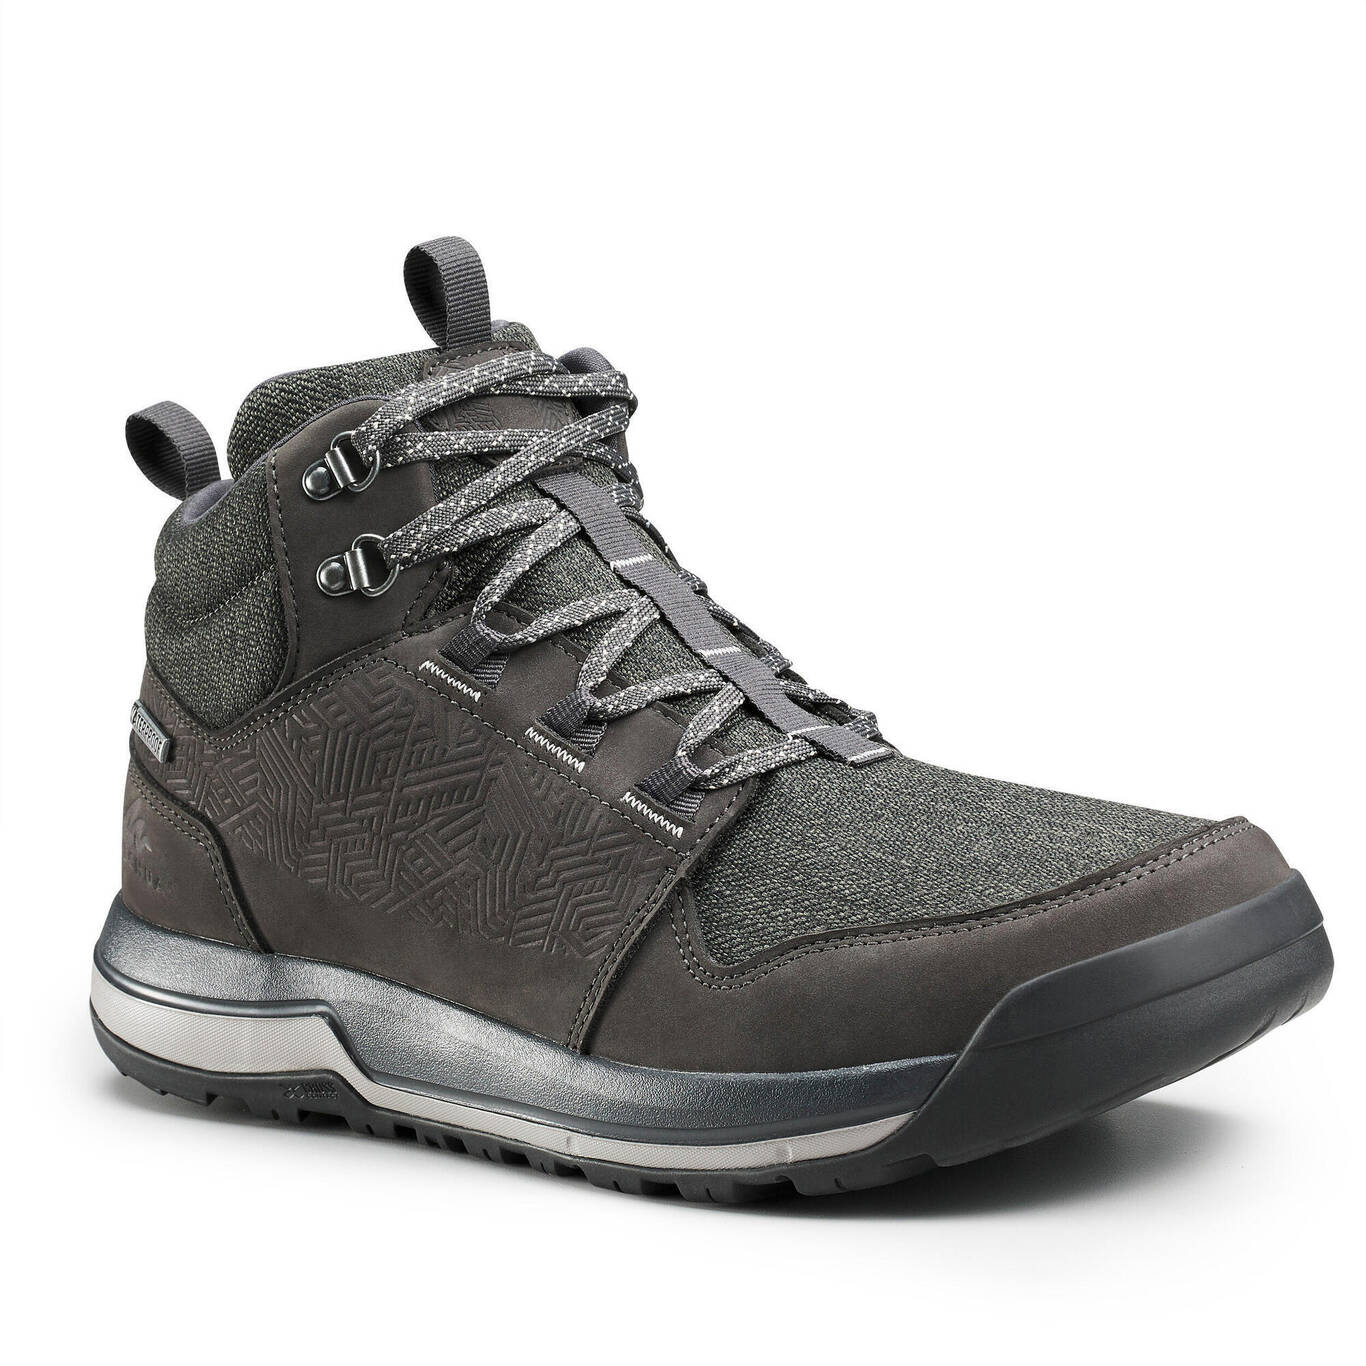 Men’s Waterproof Hiking Shoes  - NH500 Mid WP